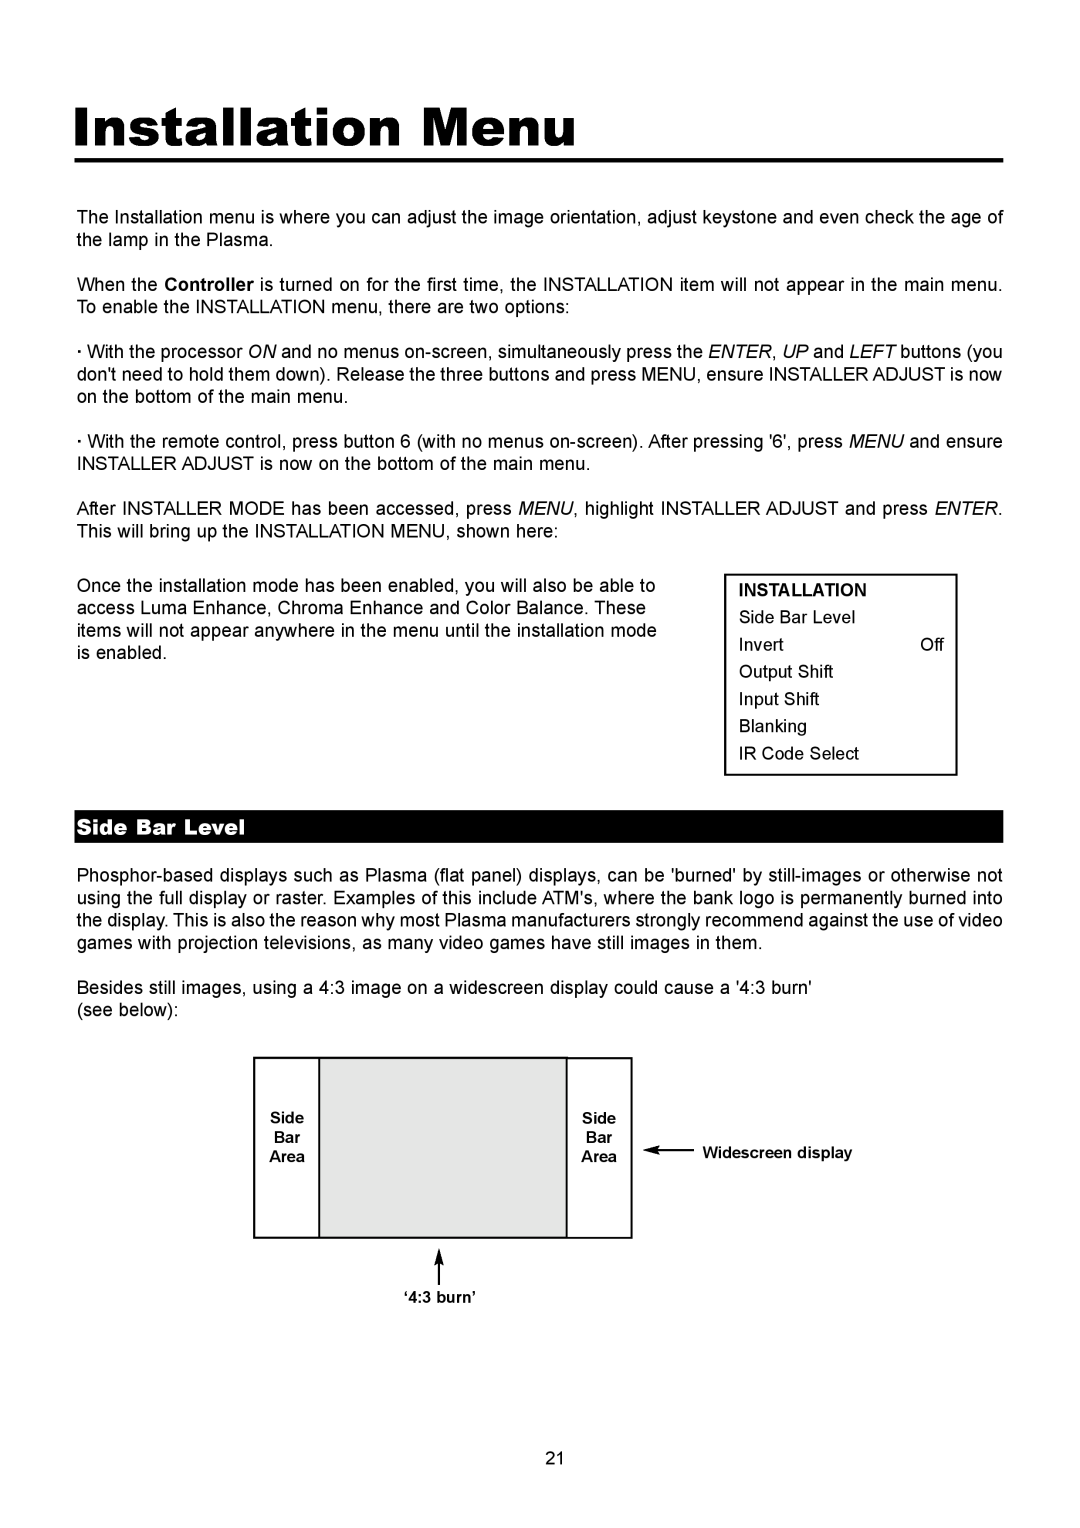 Runco PL-61CX manual Installation Menu, Side Bar Level 